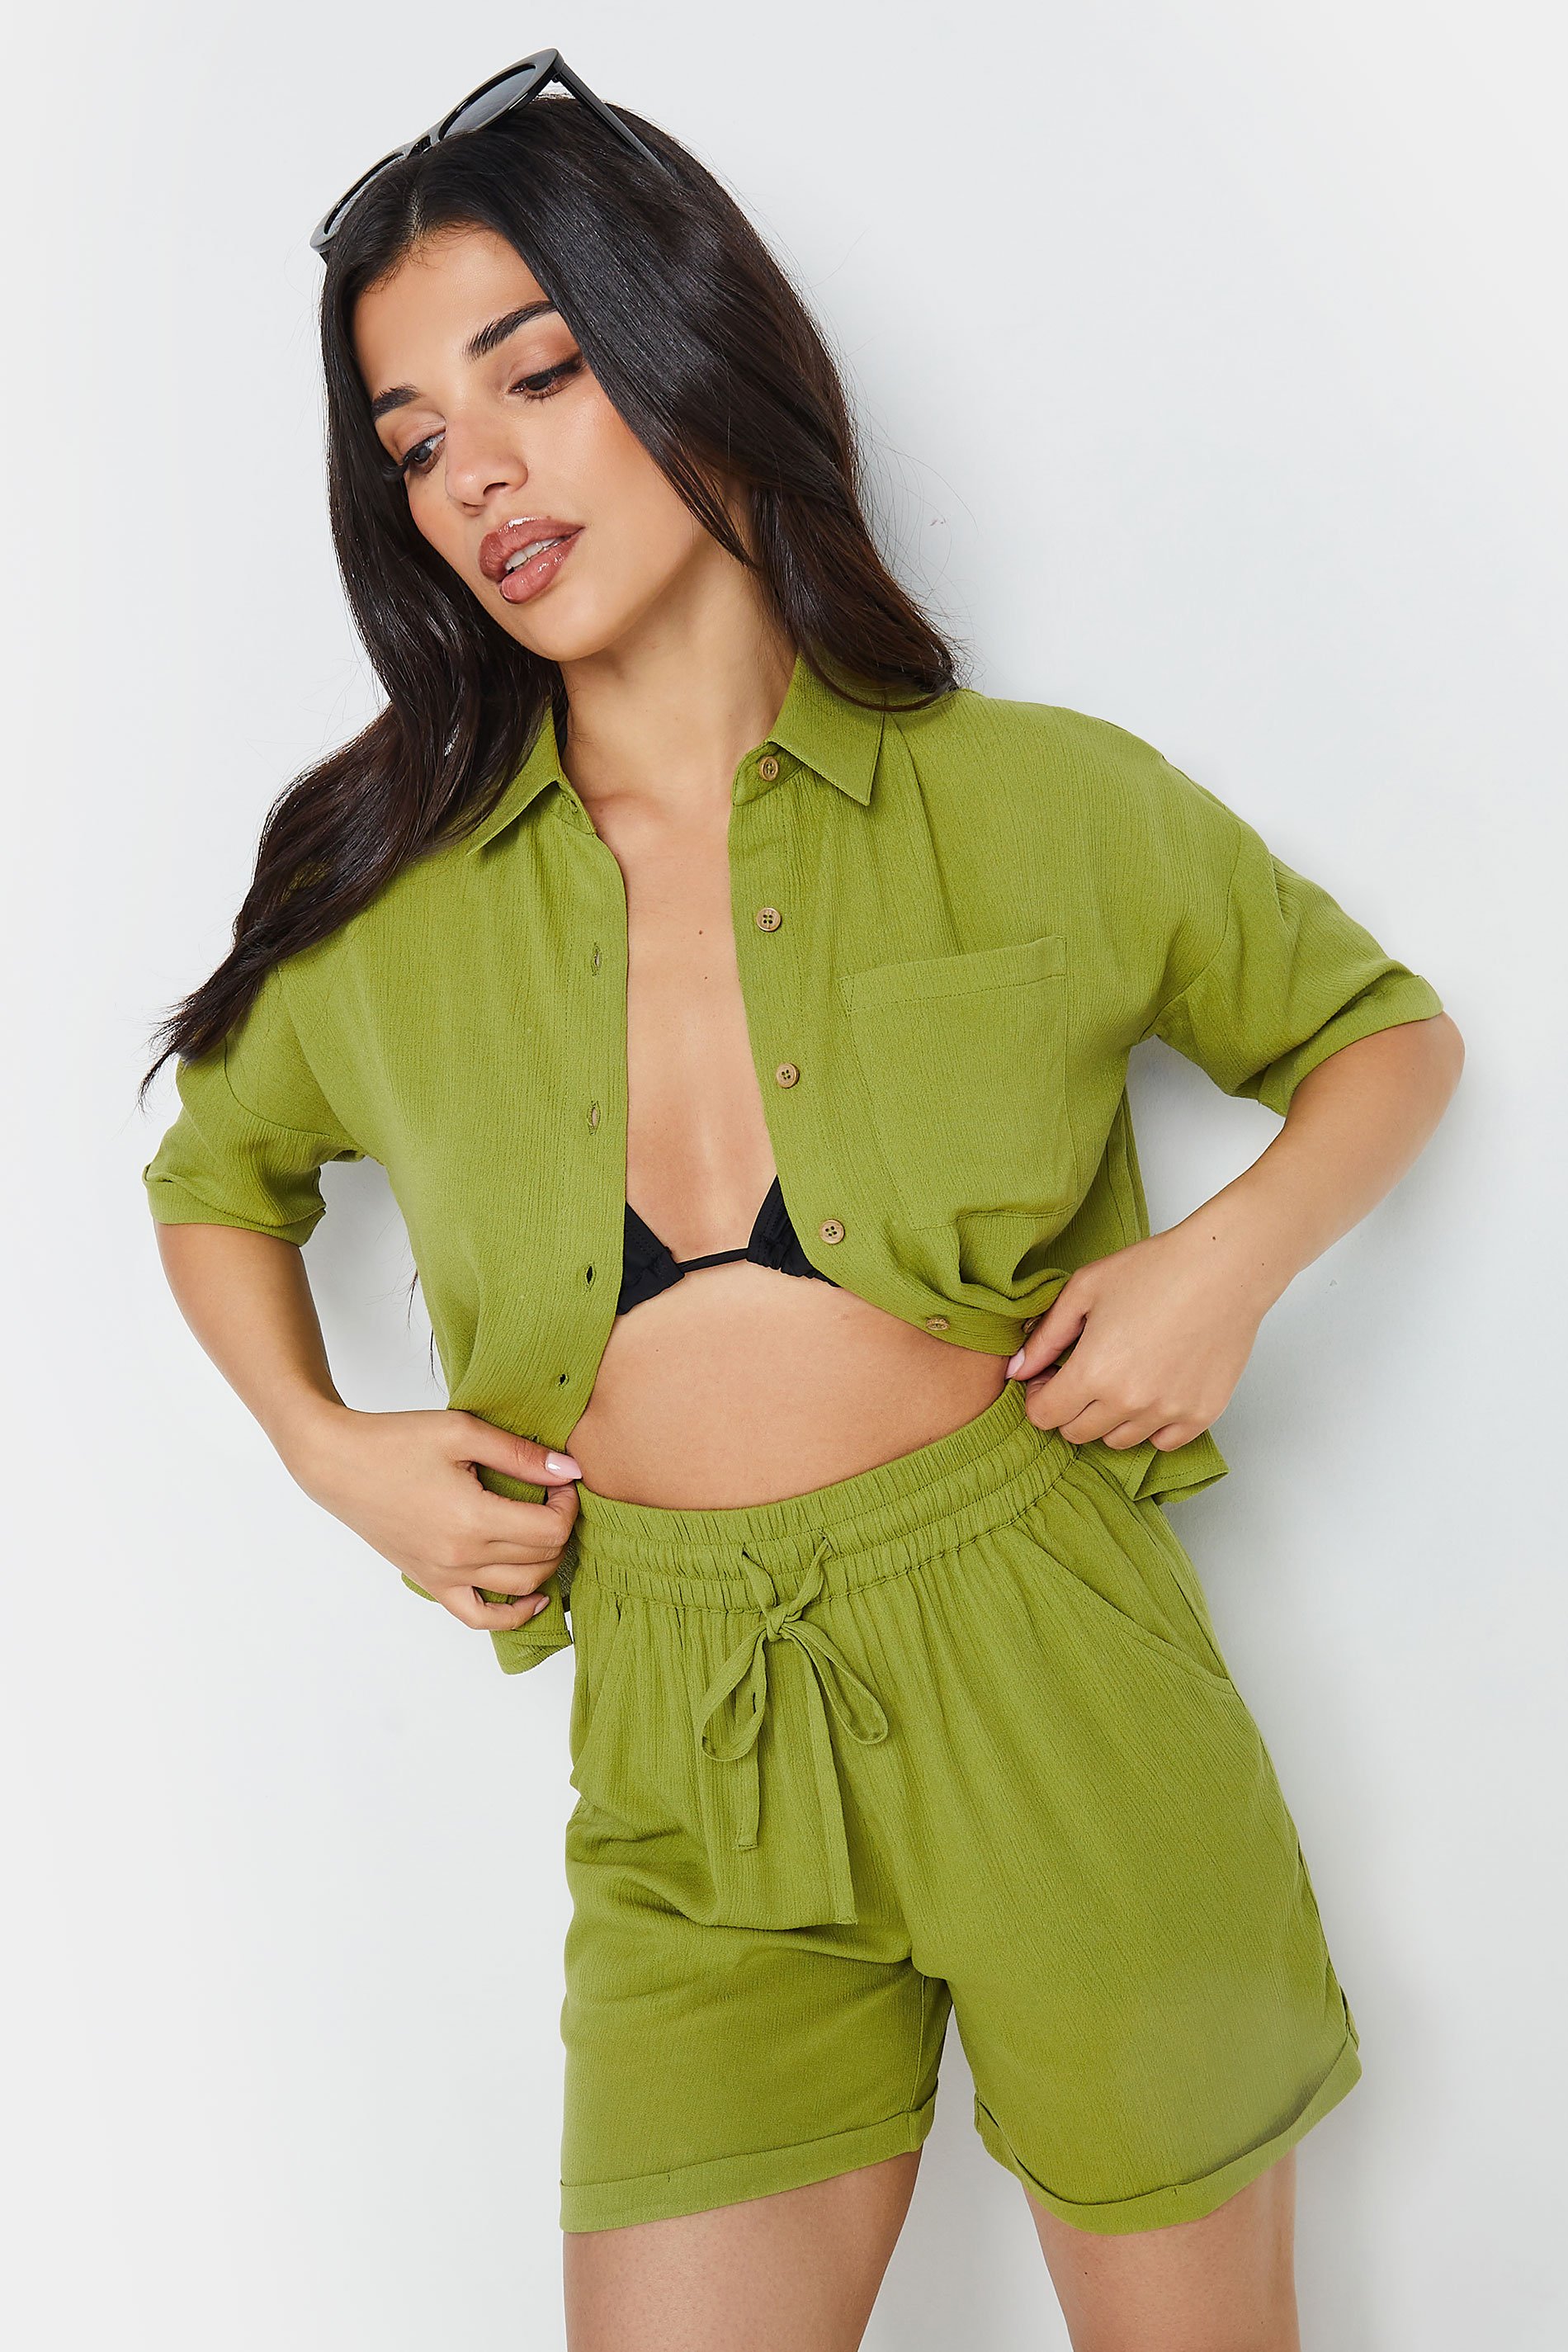 PixieGirl Petite Women's Green Textured Boxy Short Sleeve Shirt | PixieGirl 1